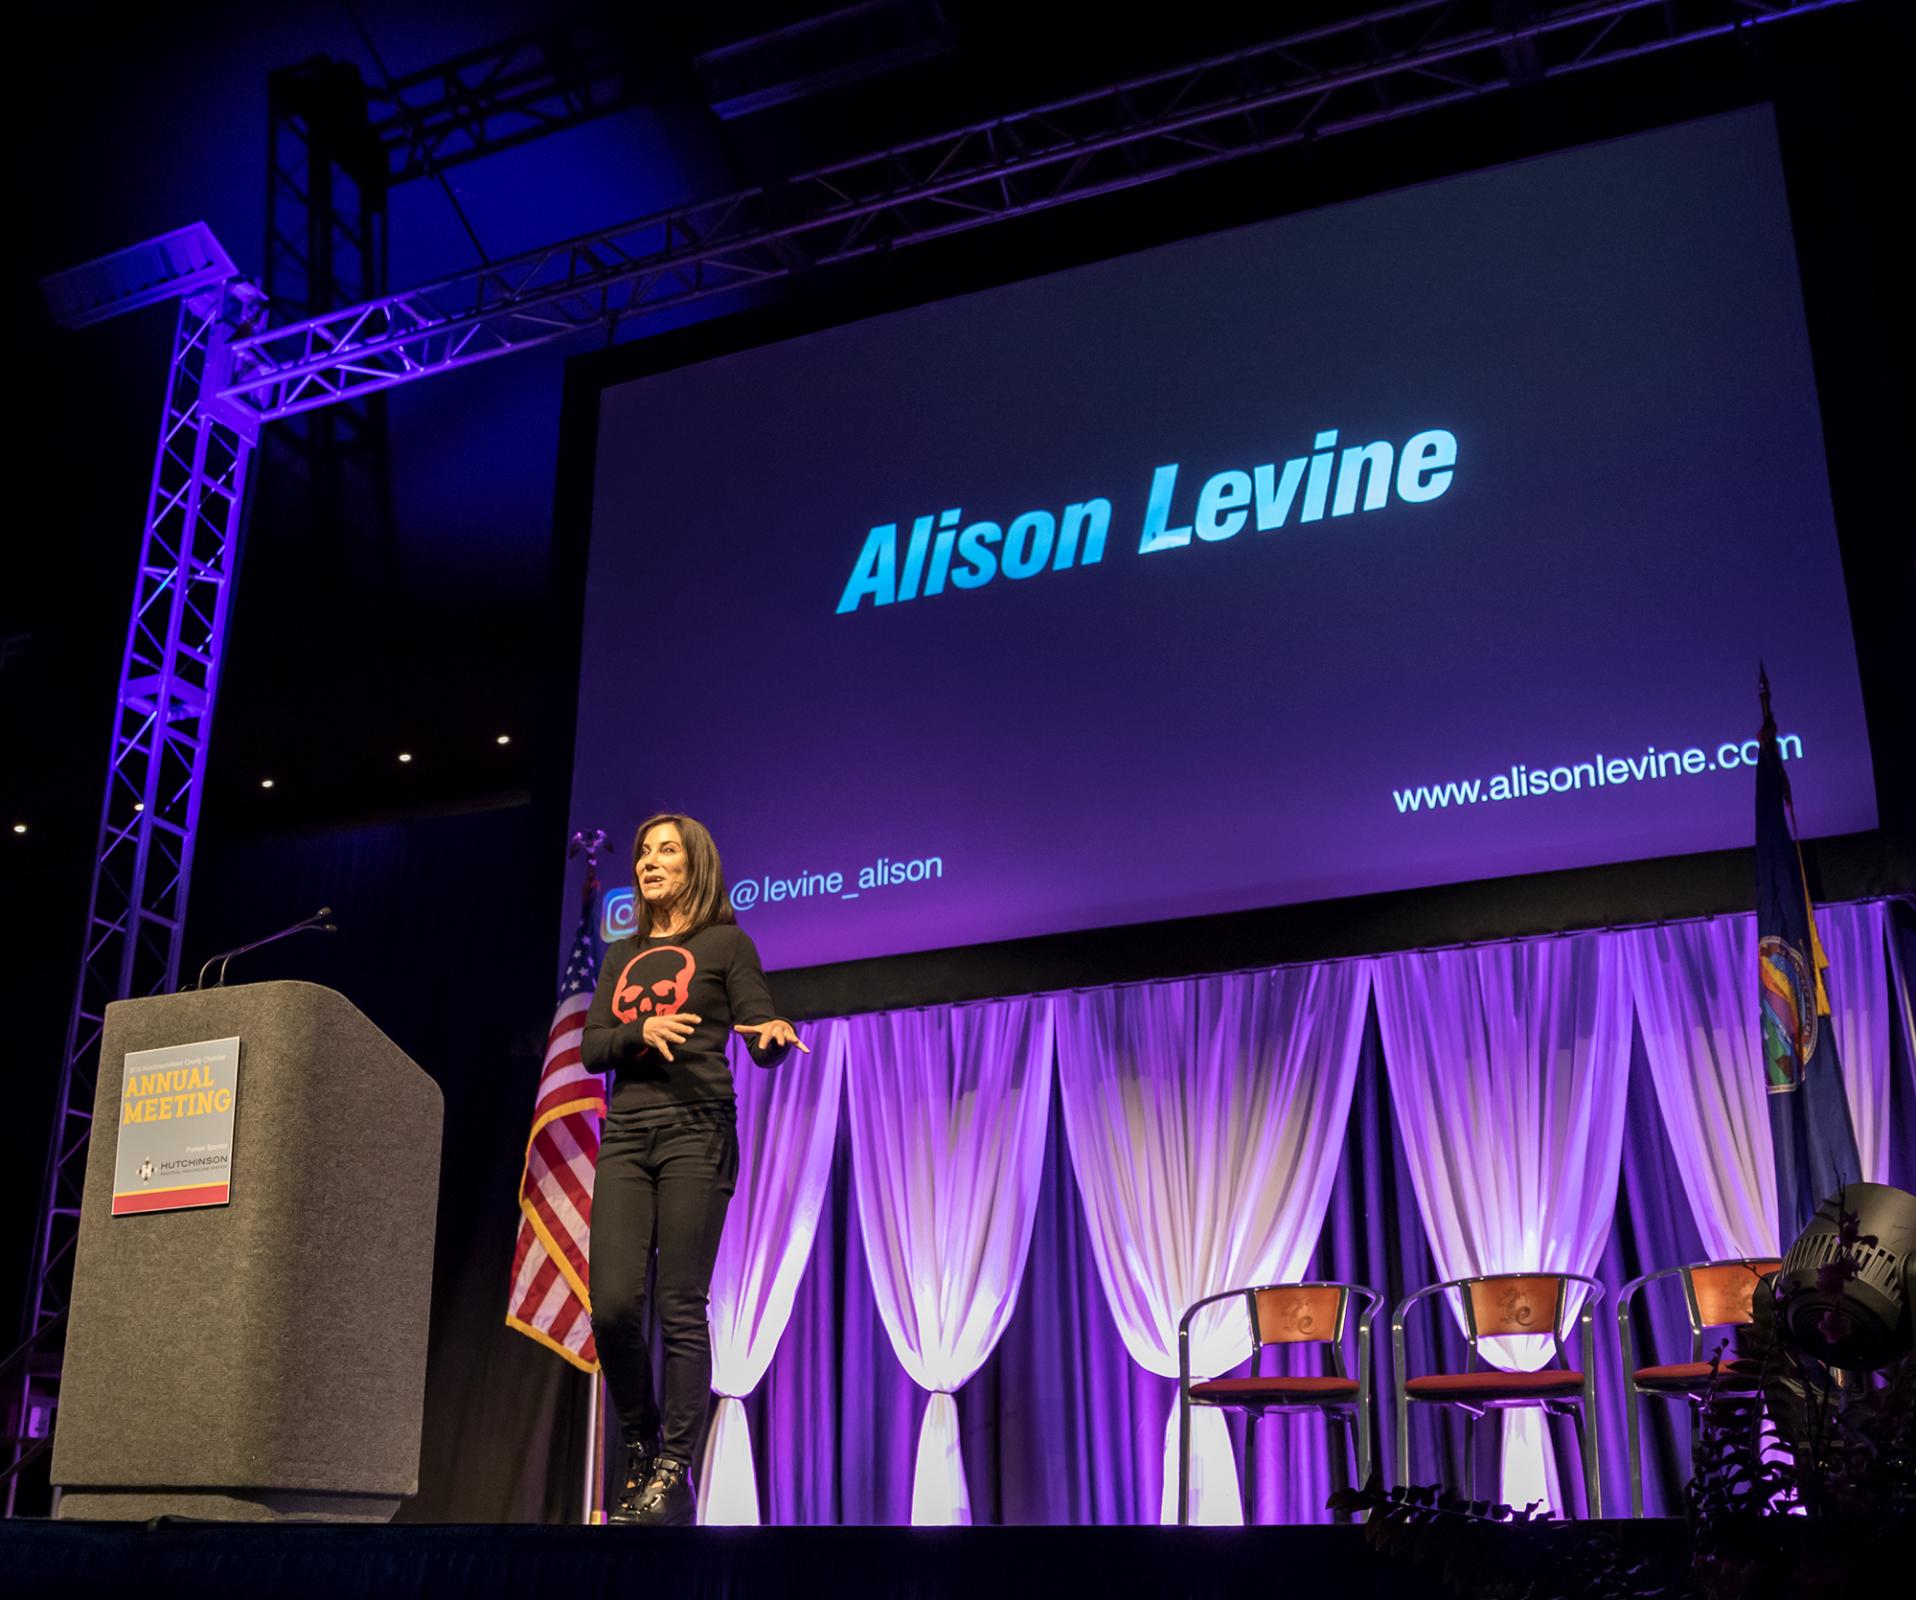 Main Photo for Featured Speaker - Alison Levine